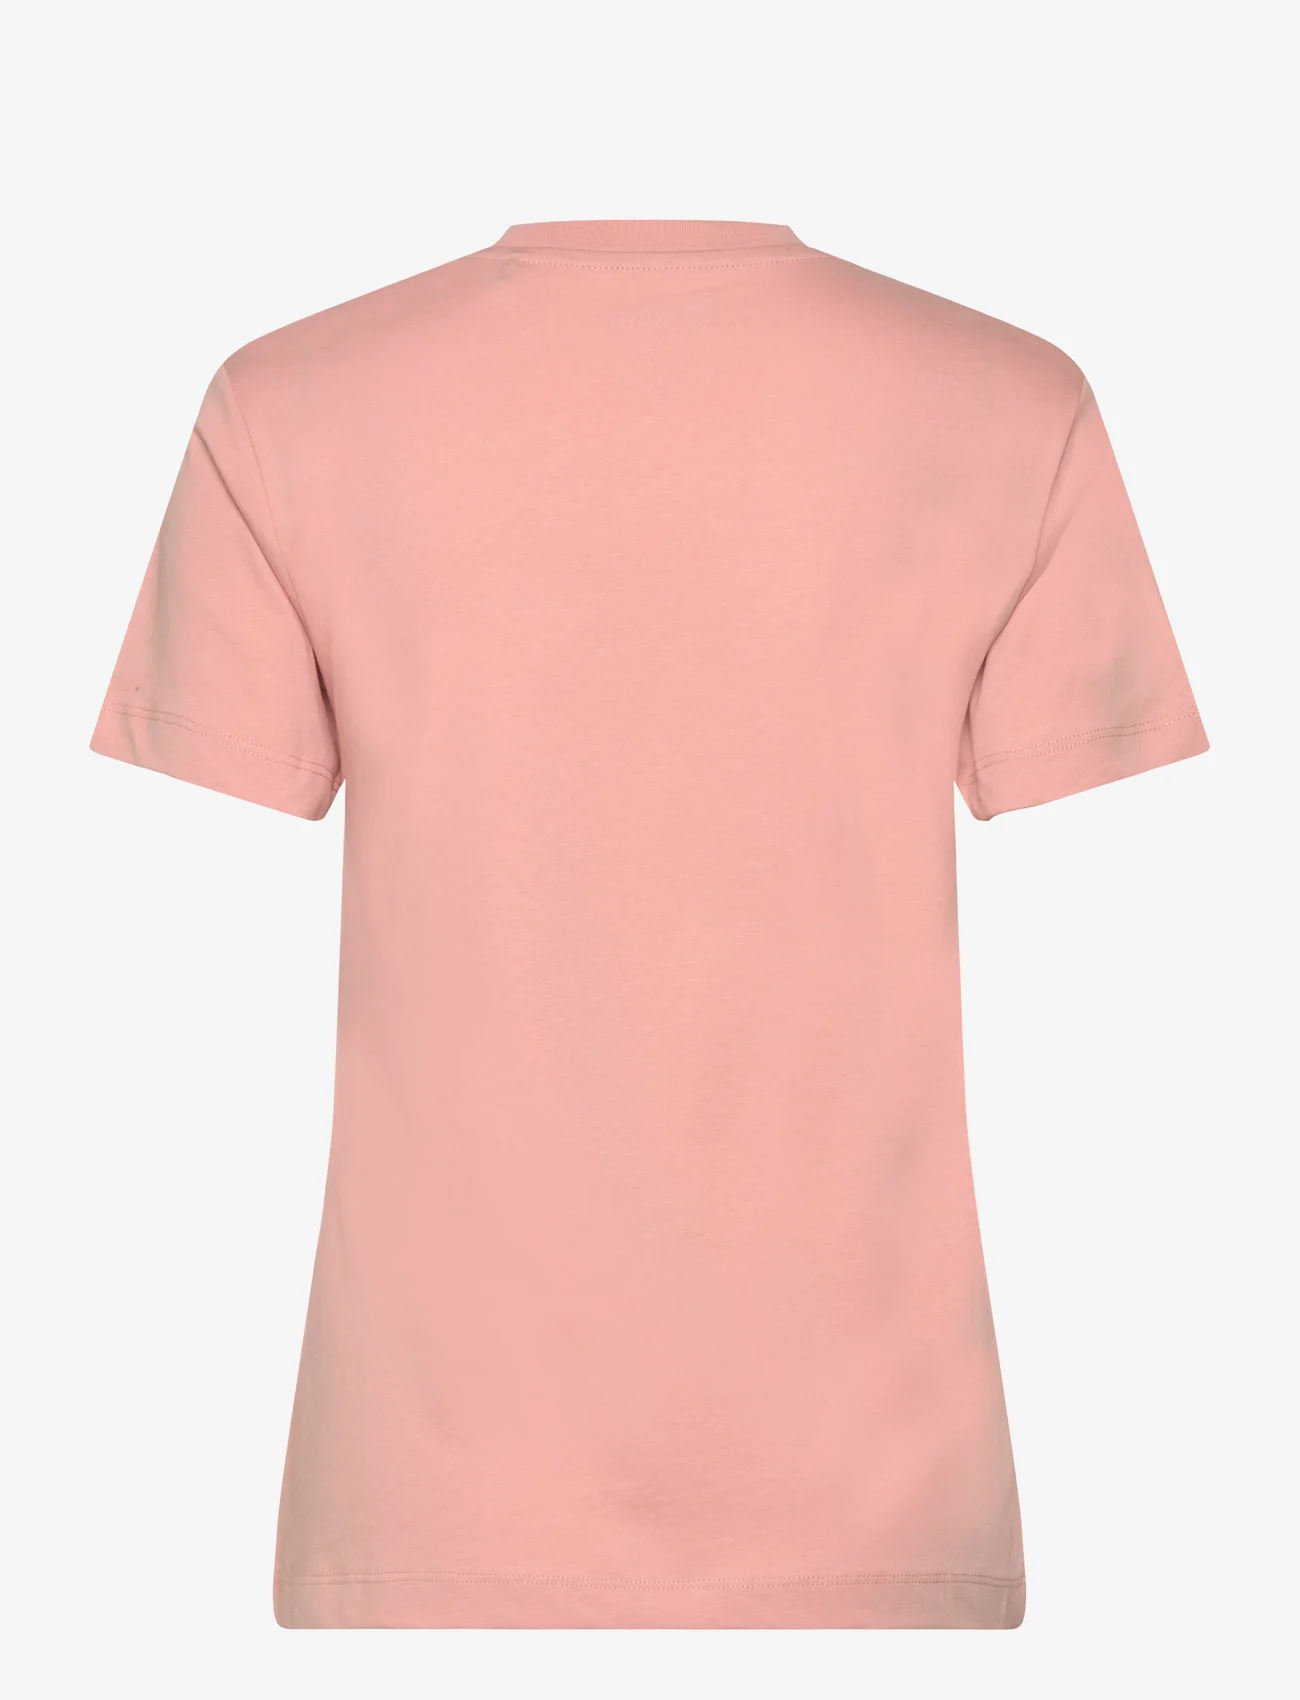 Jack Wolfskin - ESSENTIAL T W - t-shirts - rose dawn - 1